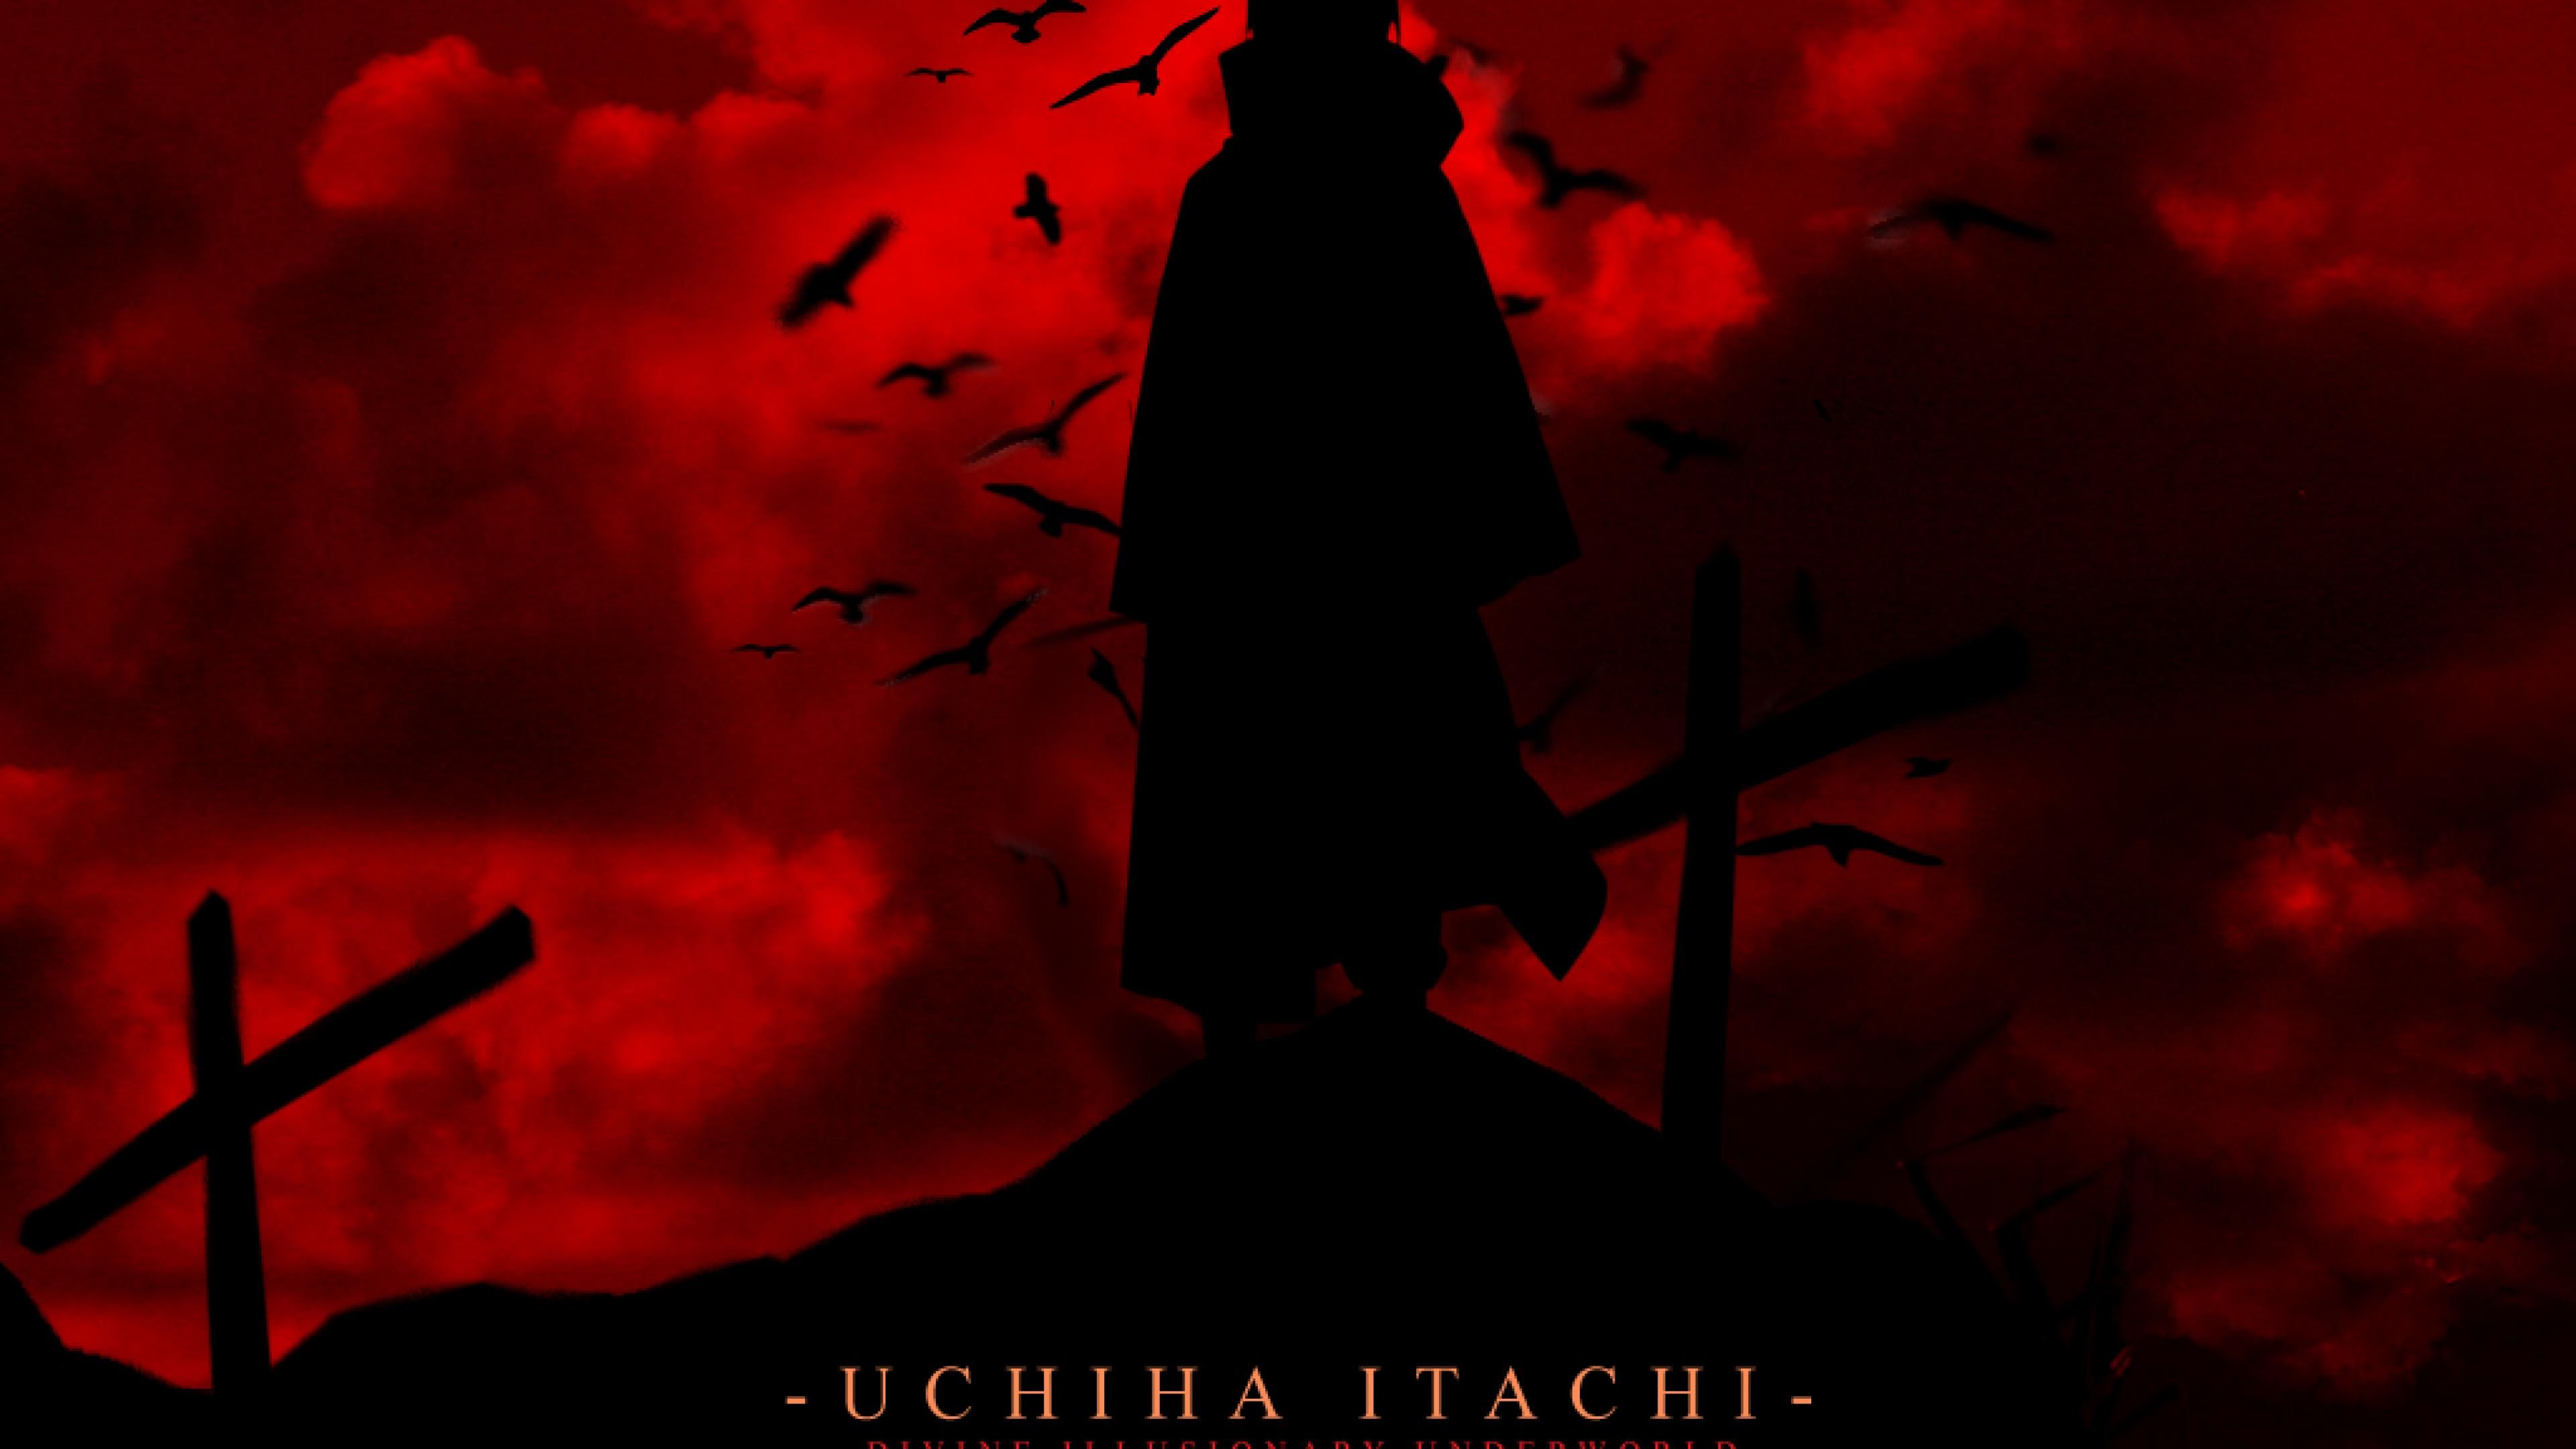 Itachi Uchiha Fondos de pantalla de alta calidad | Descargar gratis